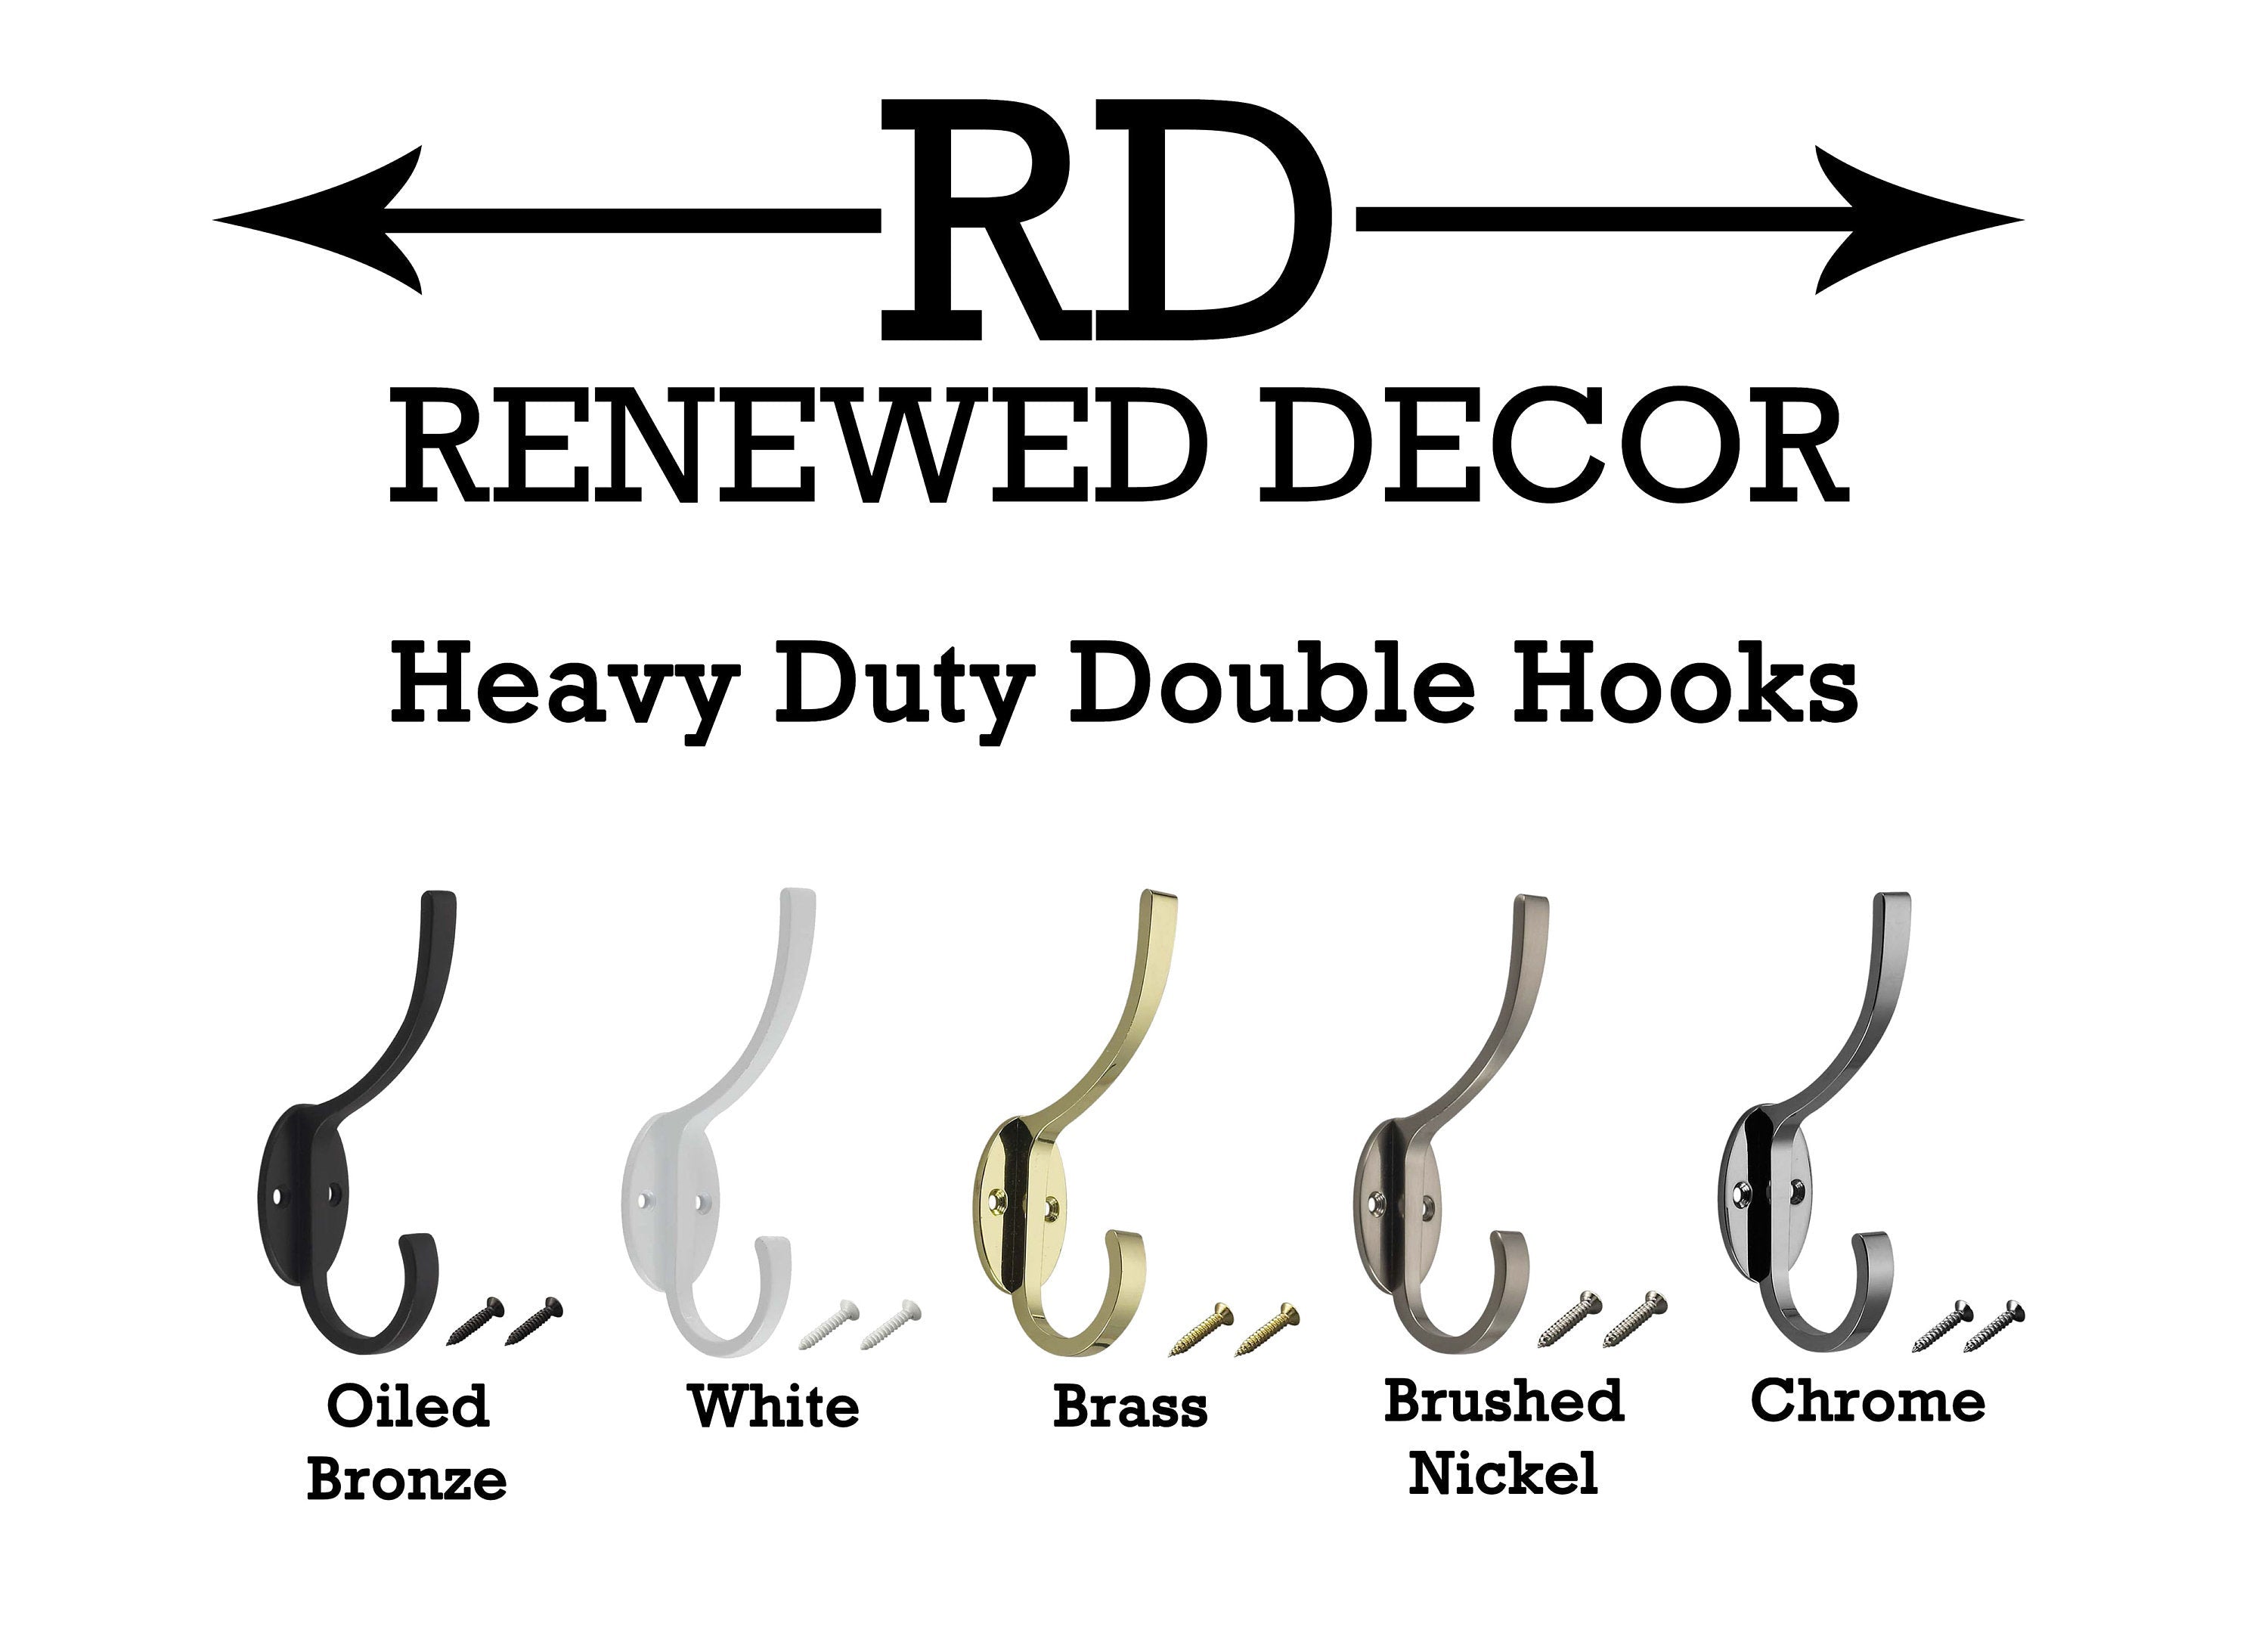 Heavy Duty Double Hooks 5 Finishes, Oiled Bronze, Nickel, Brass, Chrome, White